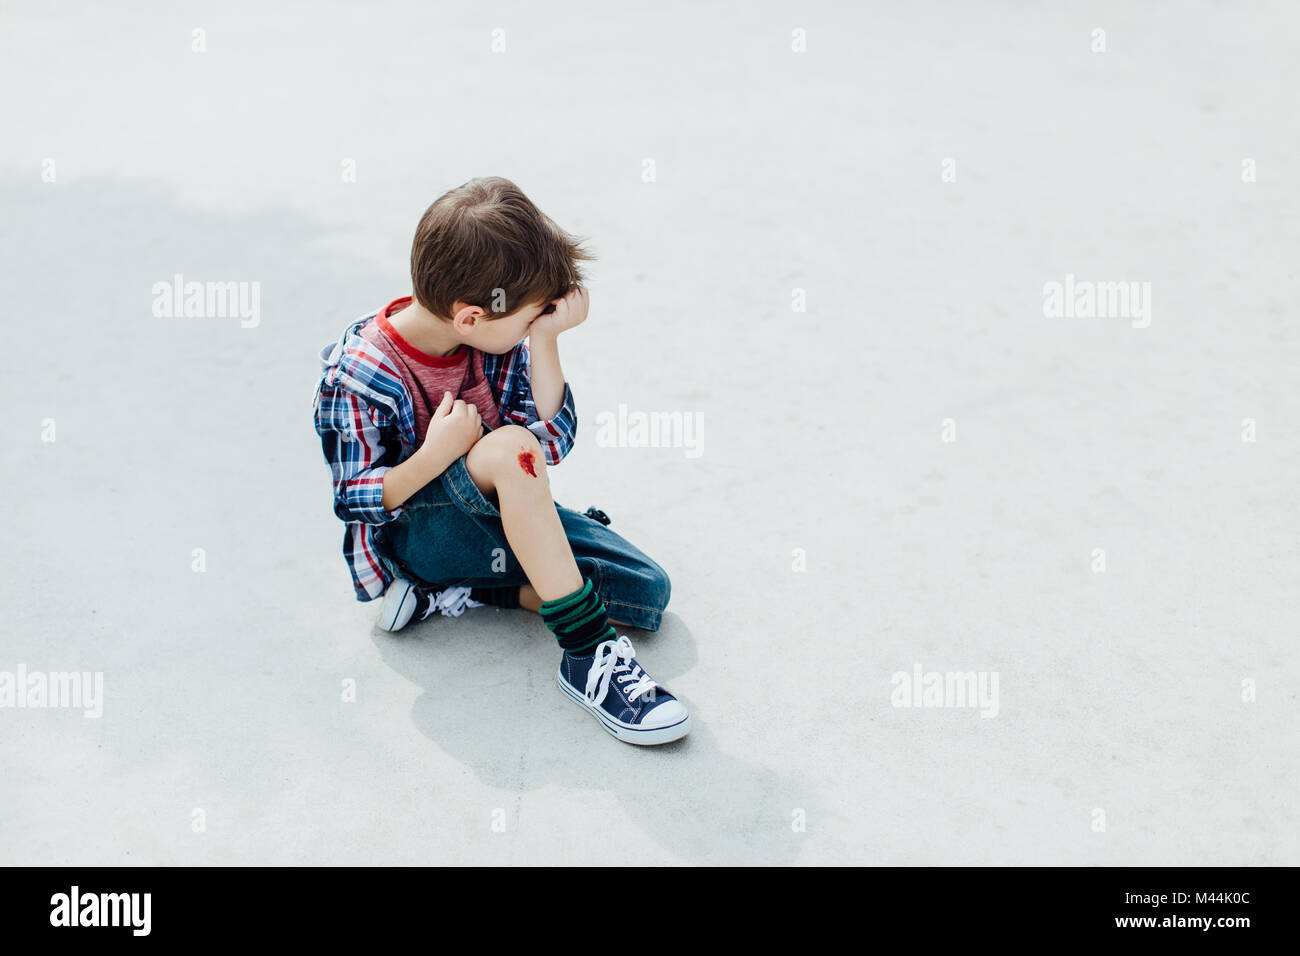 Injured little boy sitting on concrete floor with a bleeding knee Stock Photo